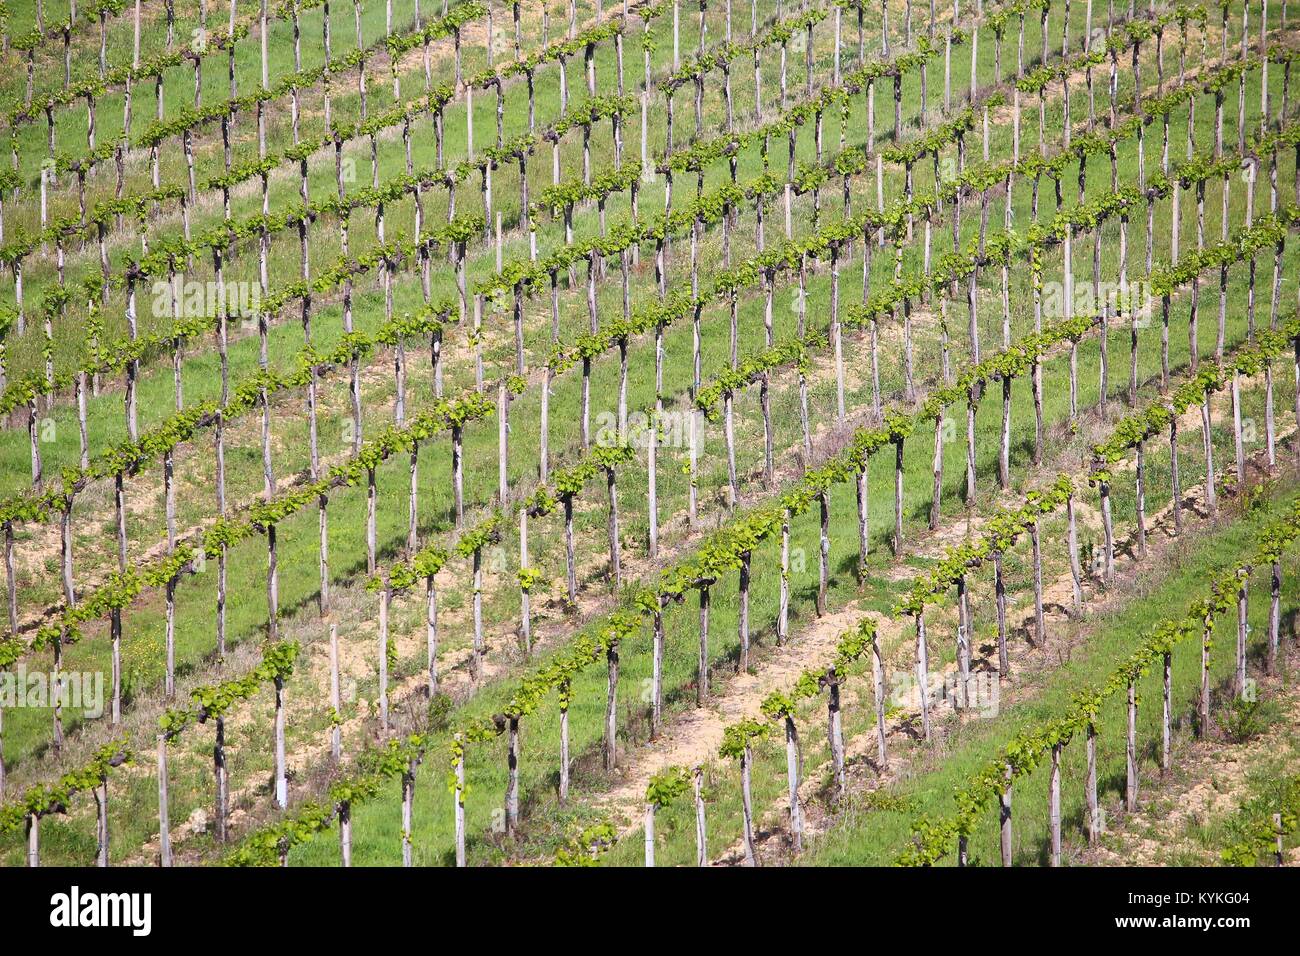 Vigneti in Toscana - Italia rurale. Superficie agricola in provincia di Siena. Foto Stock